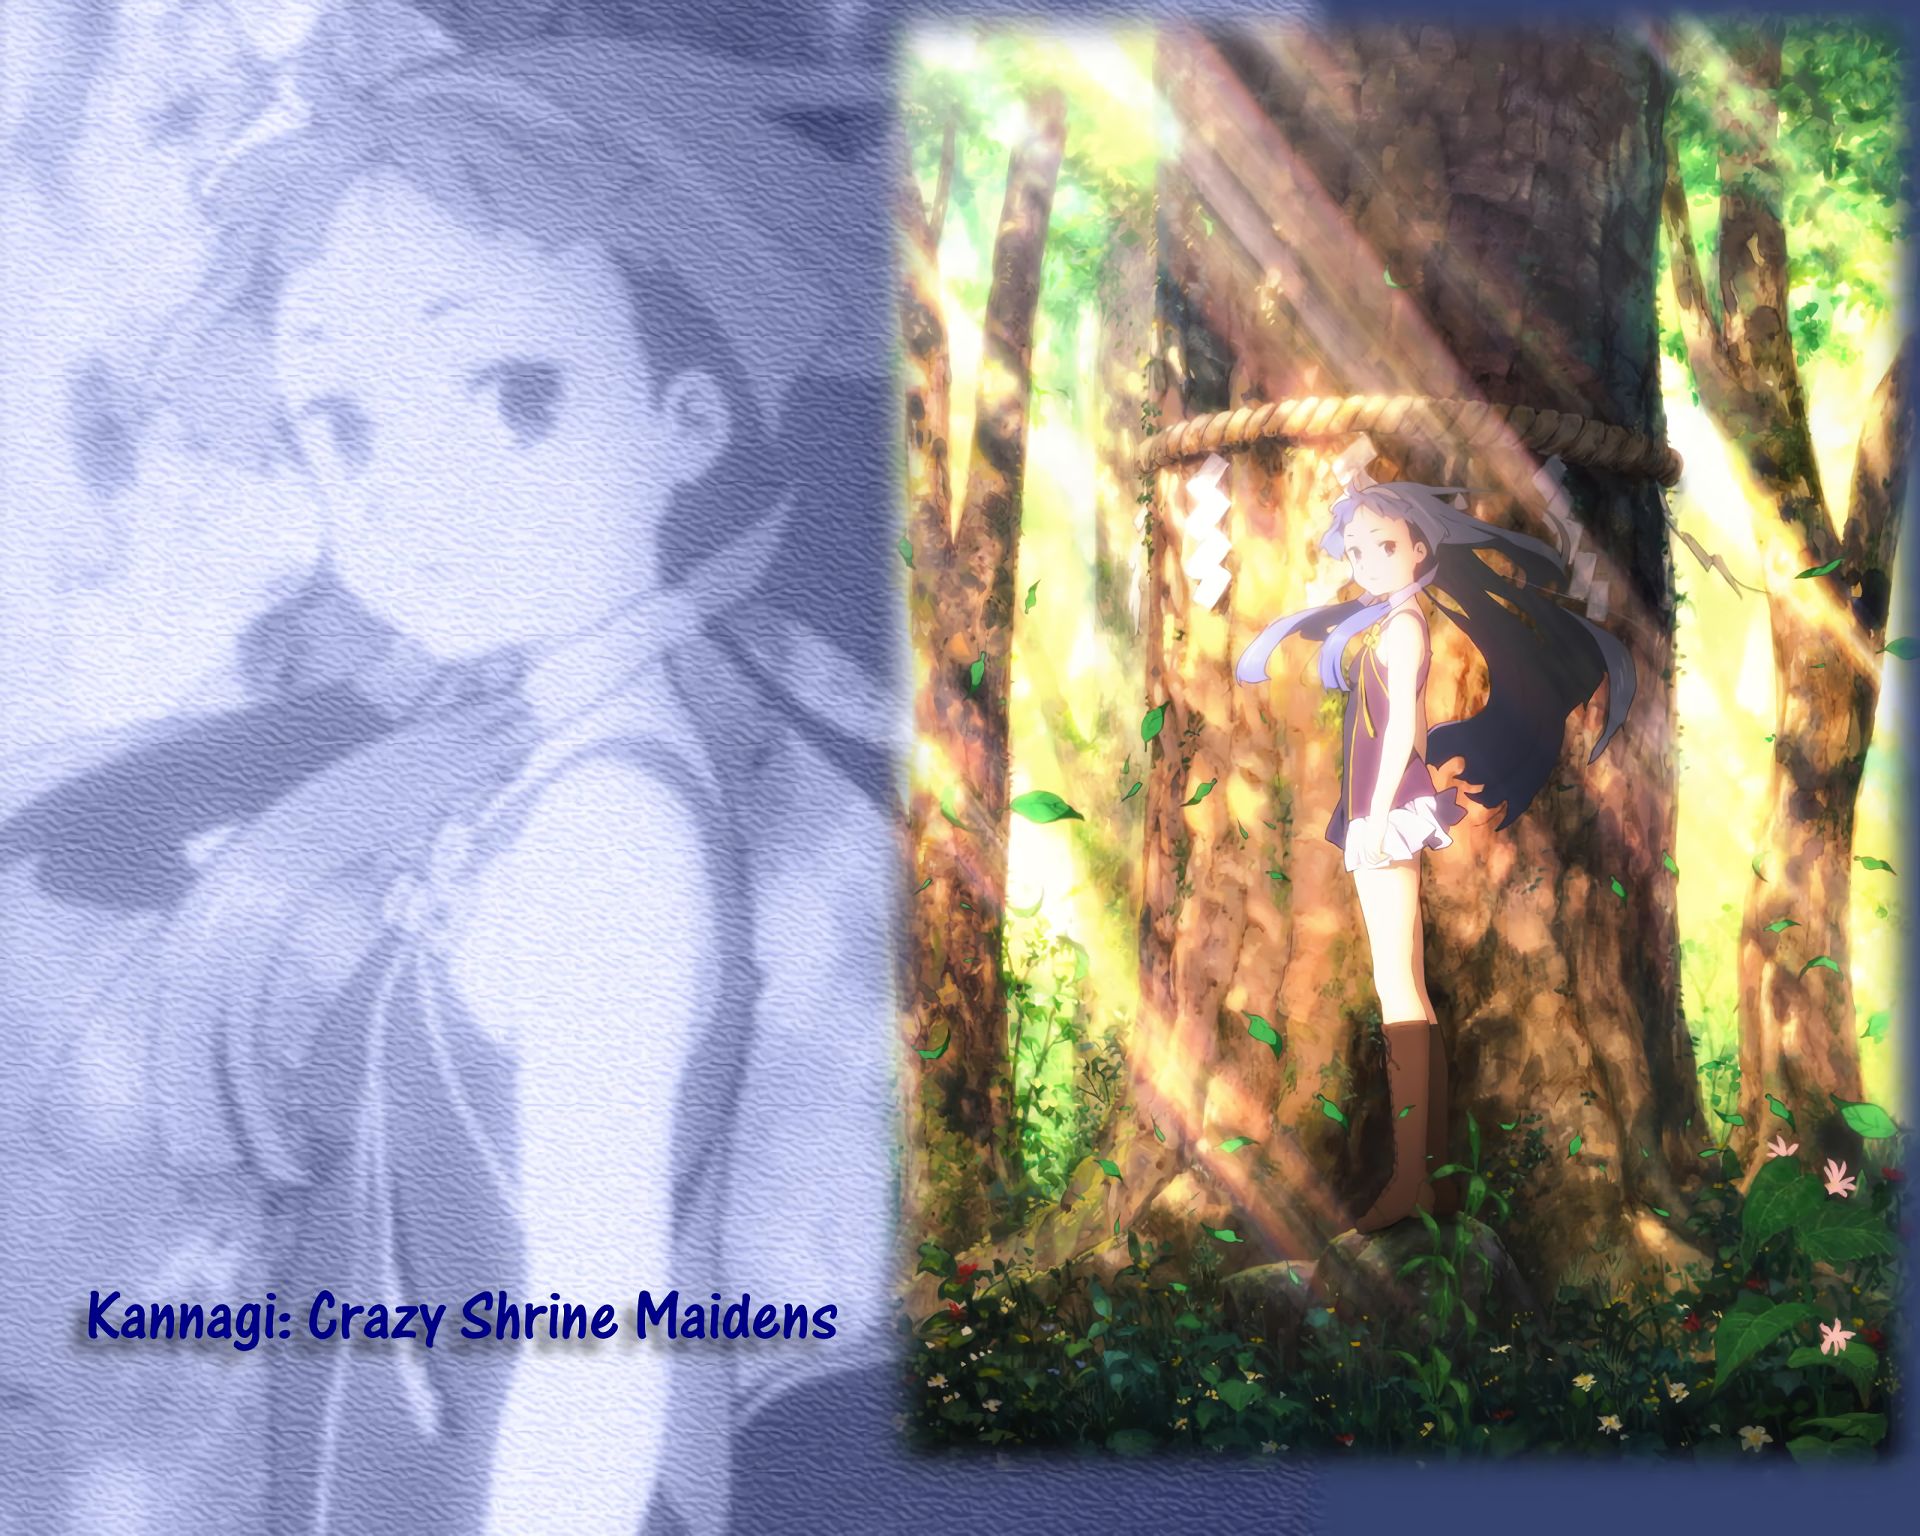 770490 Fondos de pantalla e Kannagi: Crazy Shrine Maidens imágenes en el escritorio. Descarga protectores de pantalla  en tu PC gratis